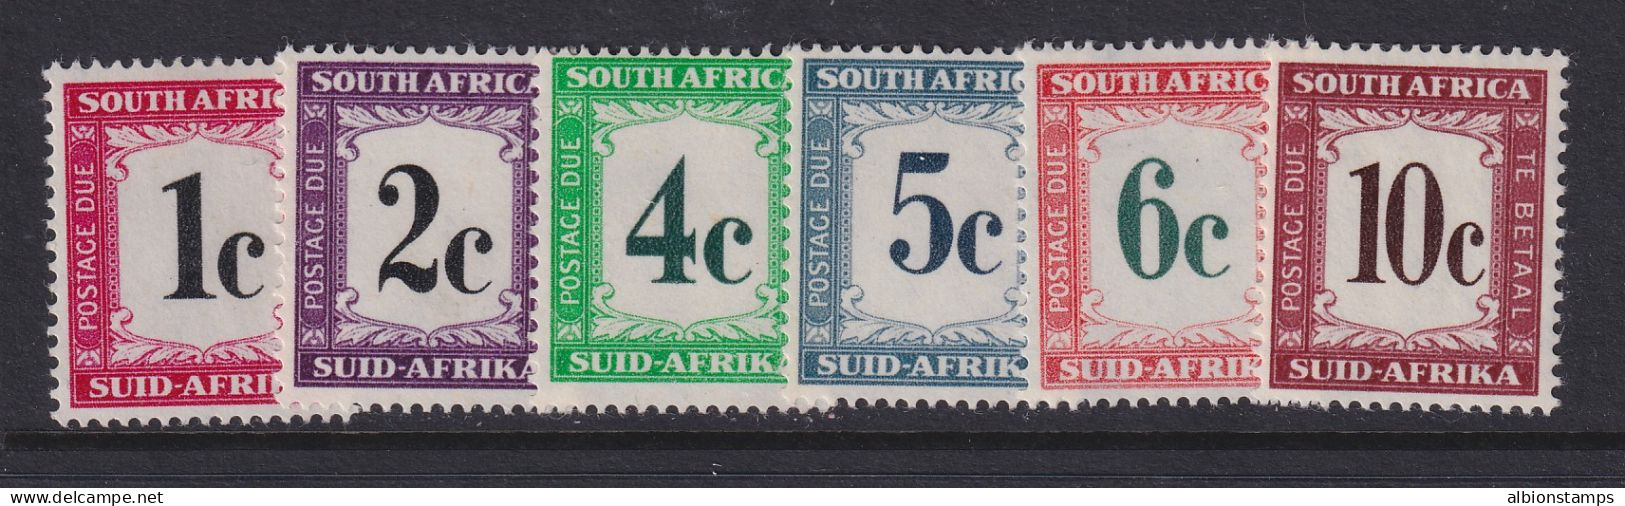 South Africa, Scott J46-J51 (SG D45-D50), MNH - Postage Due